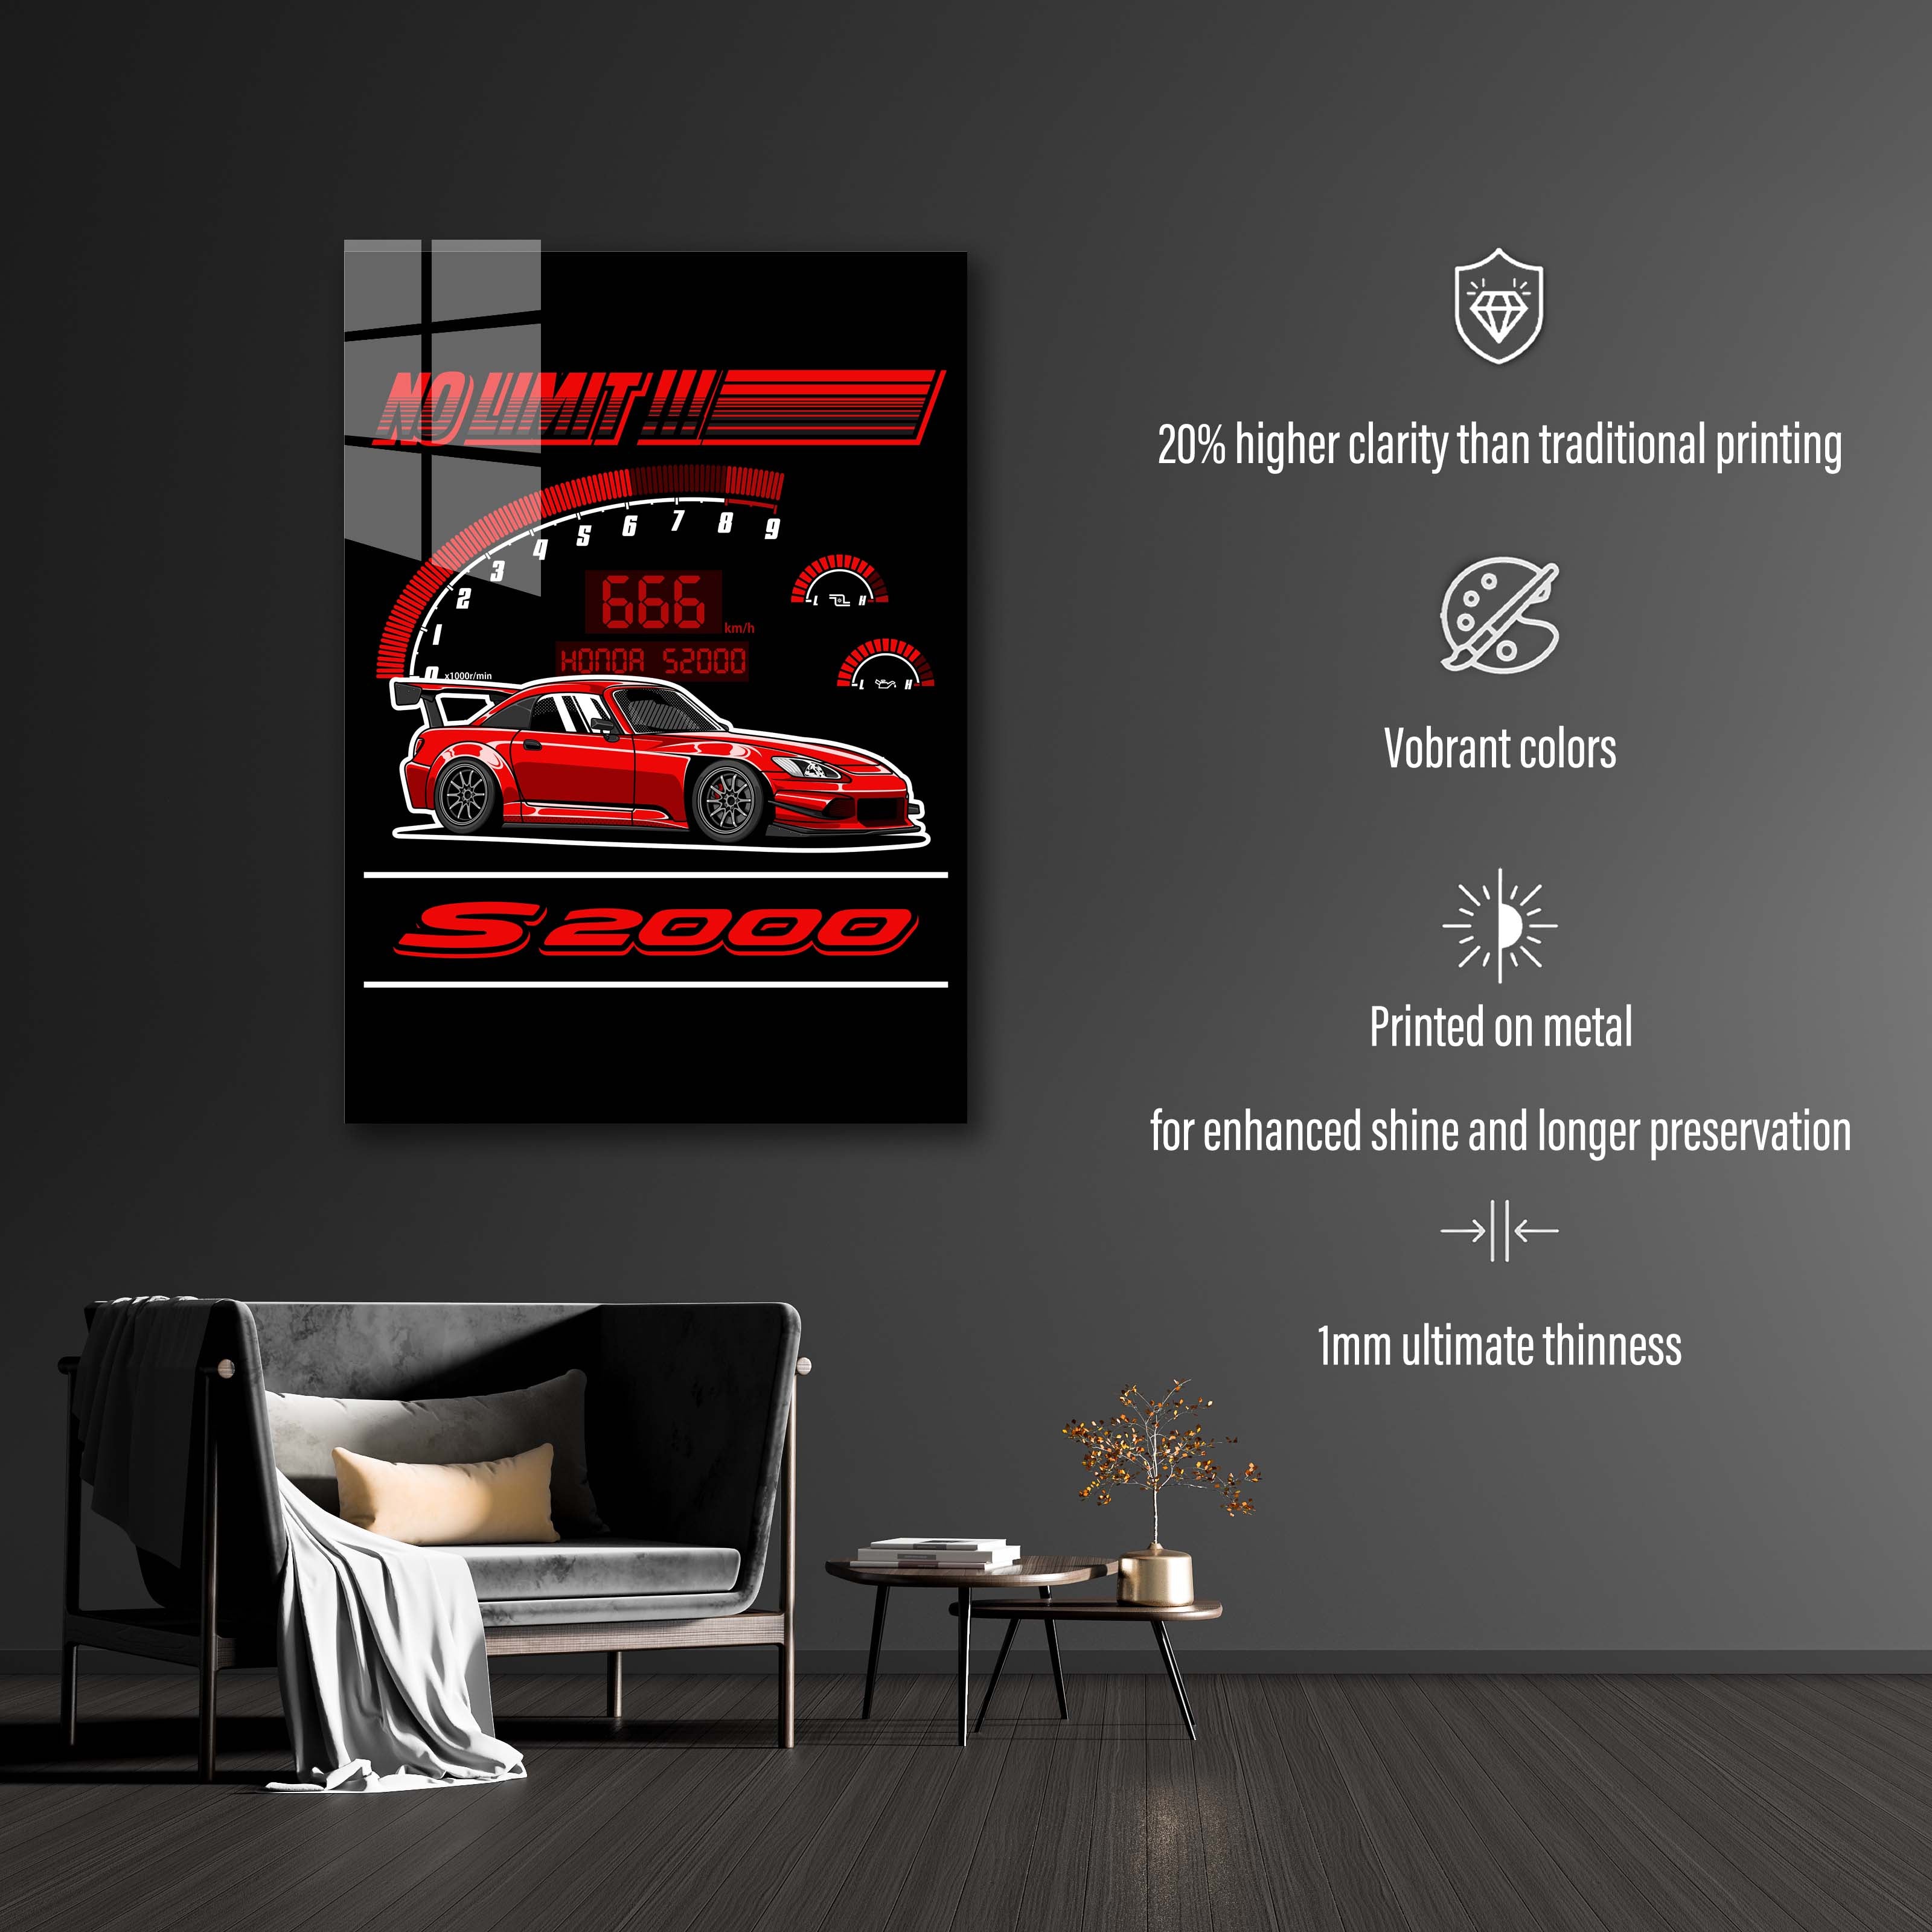 Honda S2000 Red-designed by @Bulldsgn